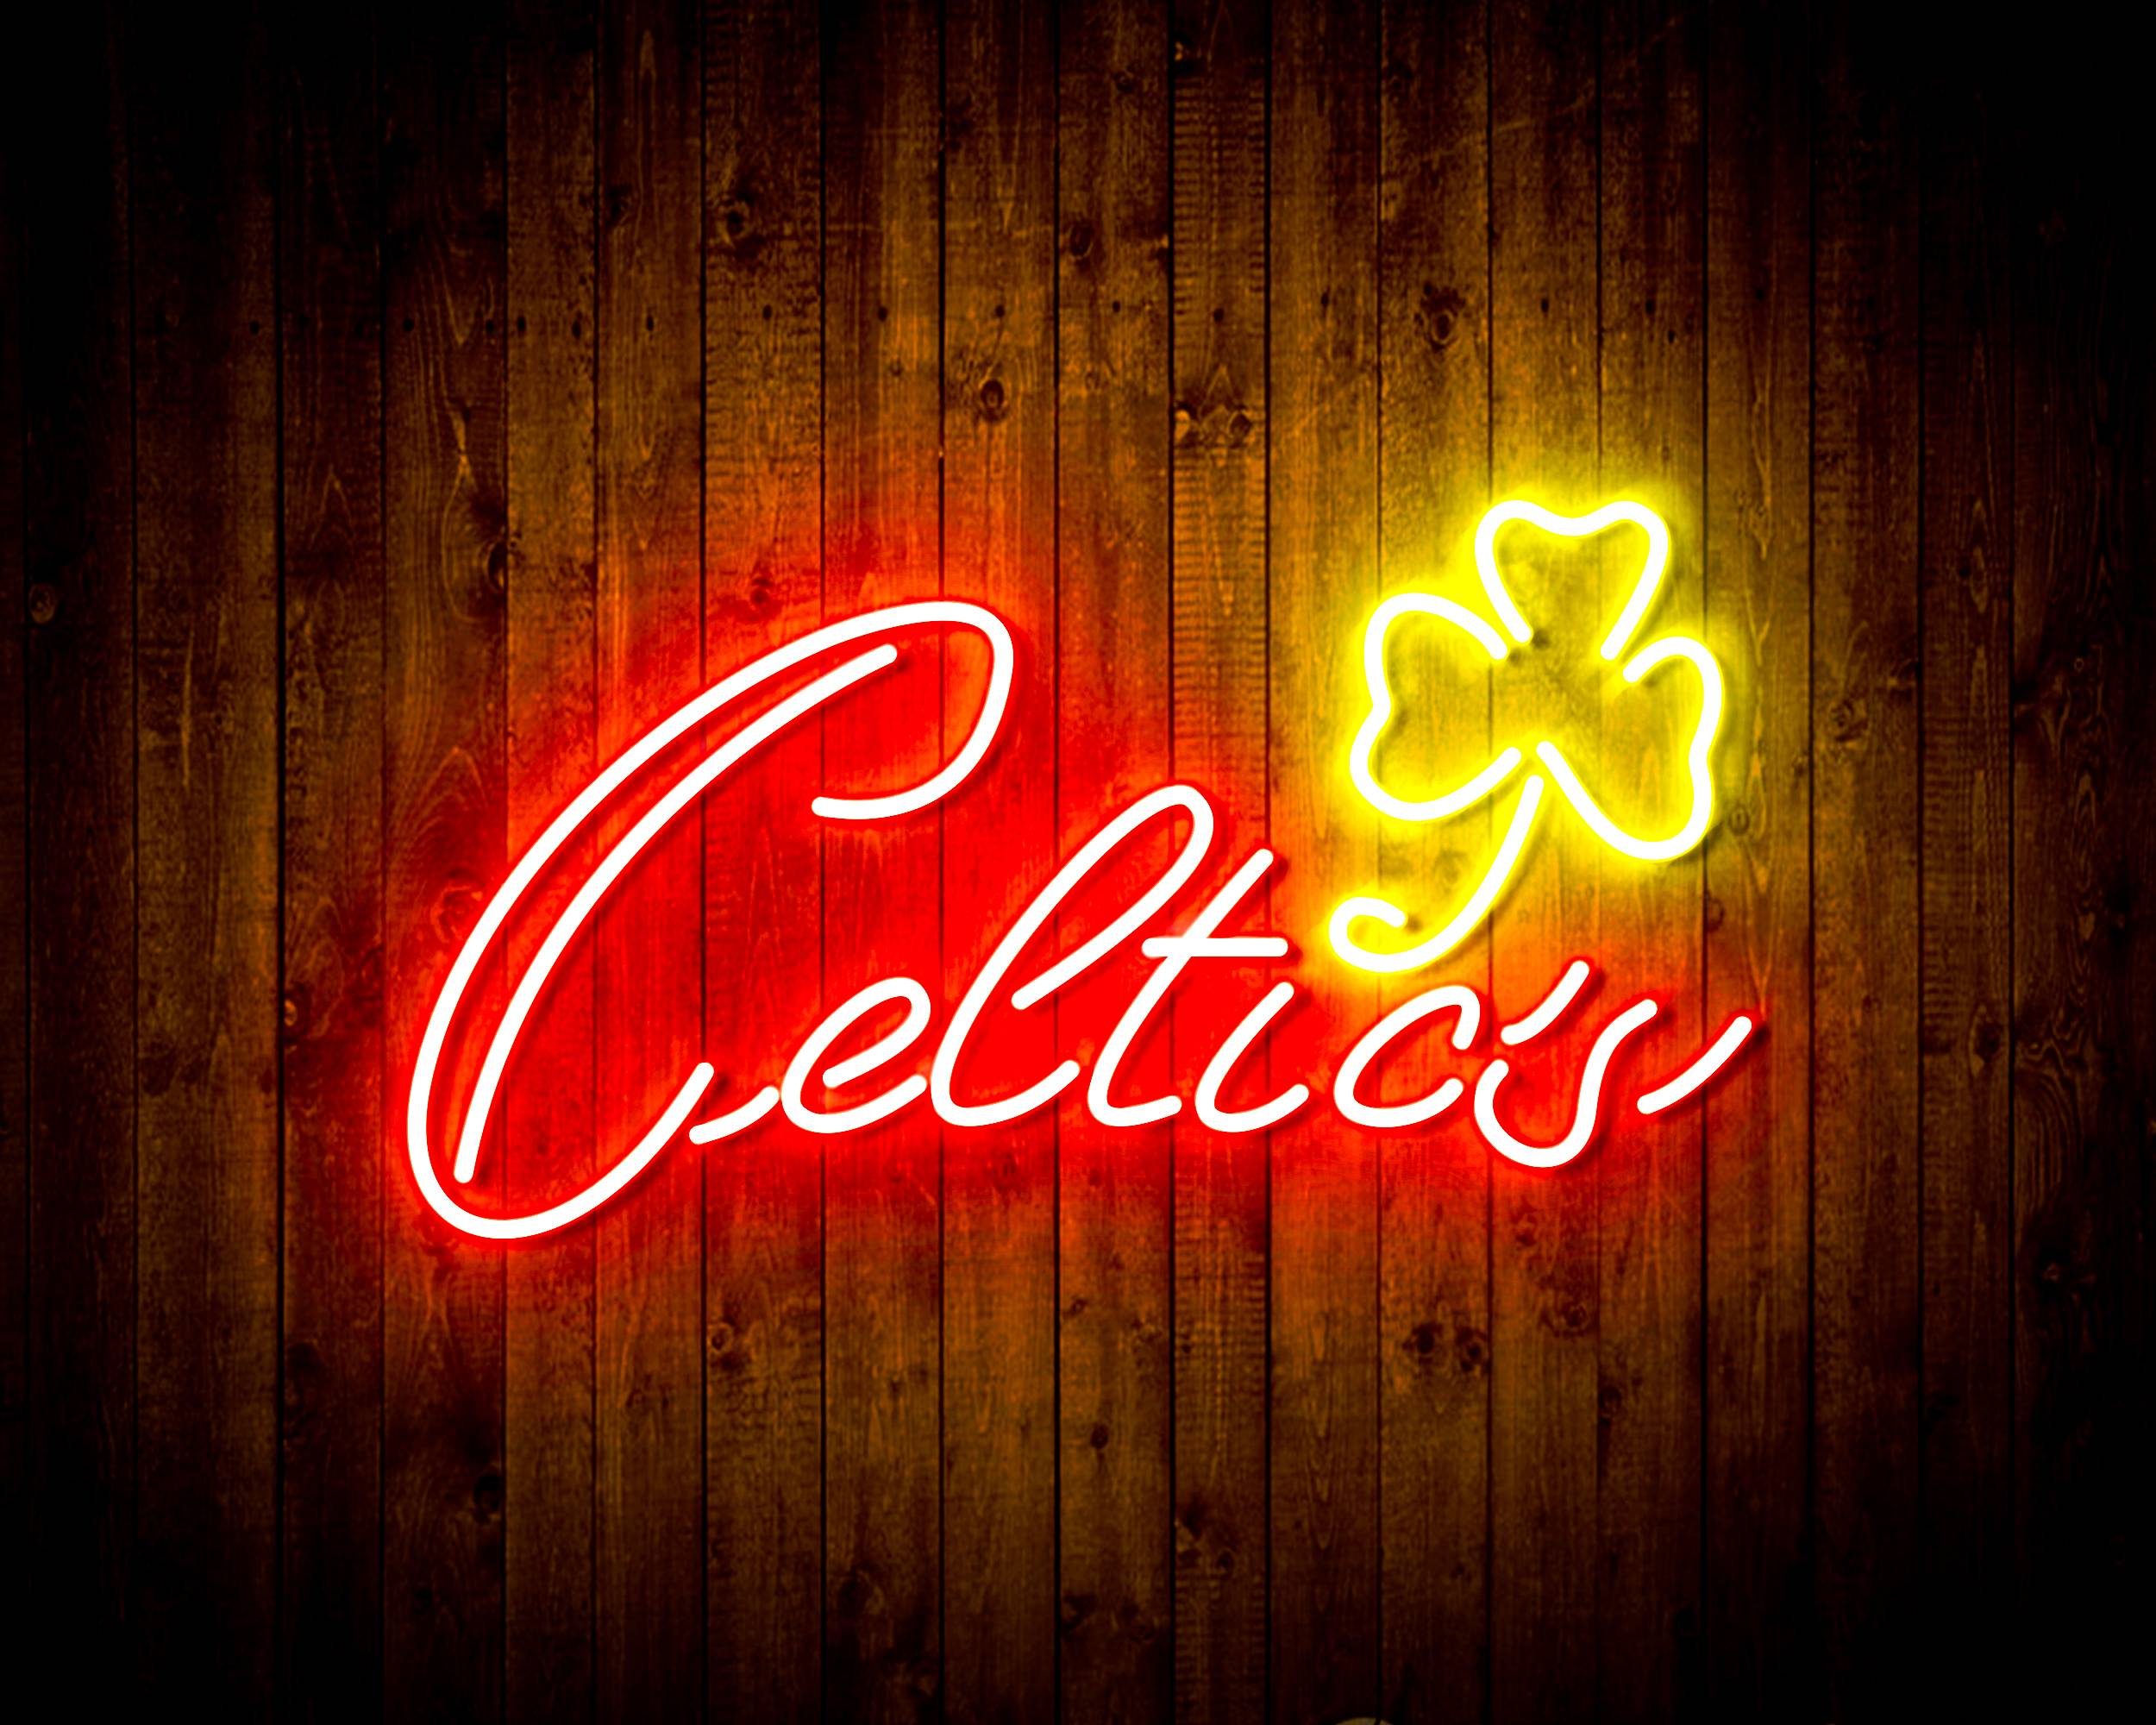 NBA Boston Celtics Handmade LED Neon Light Sign